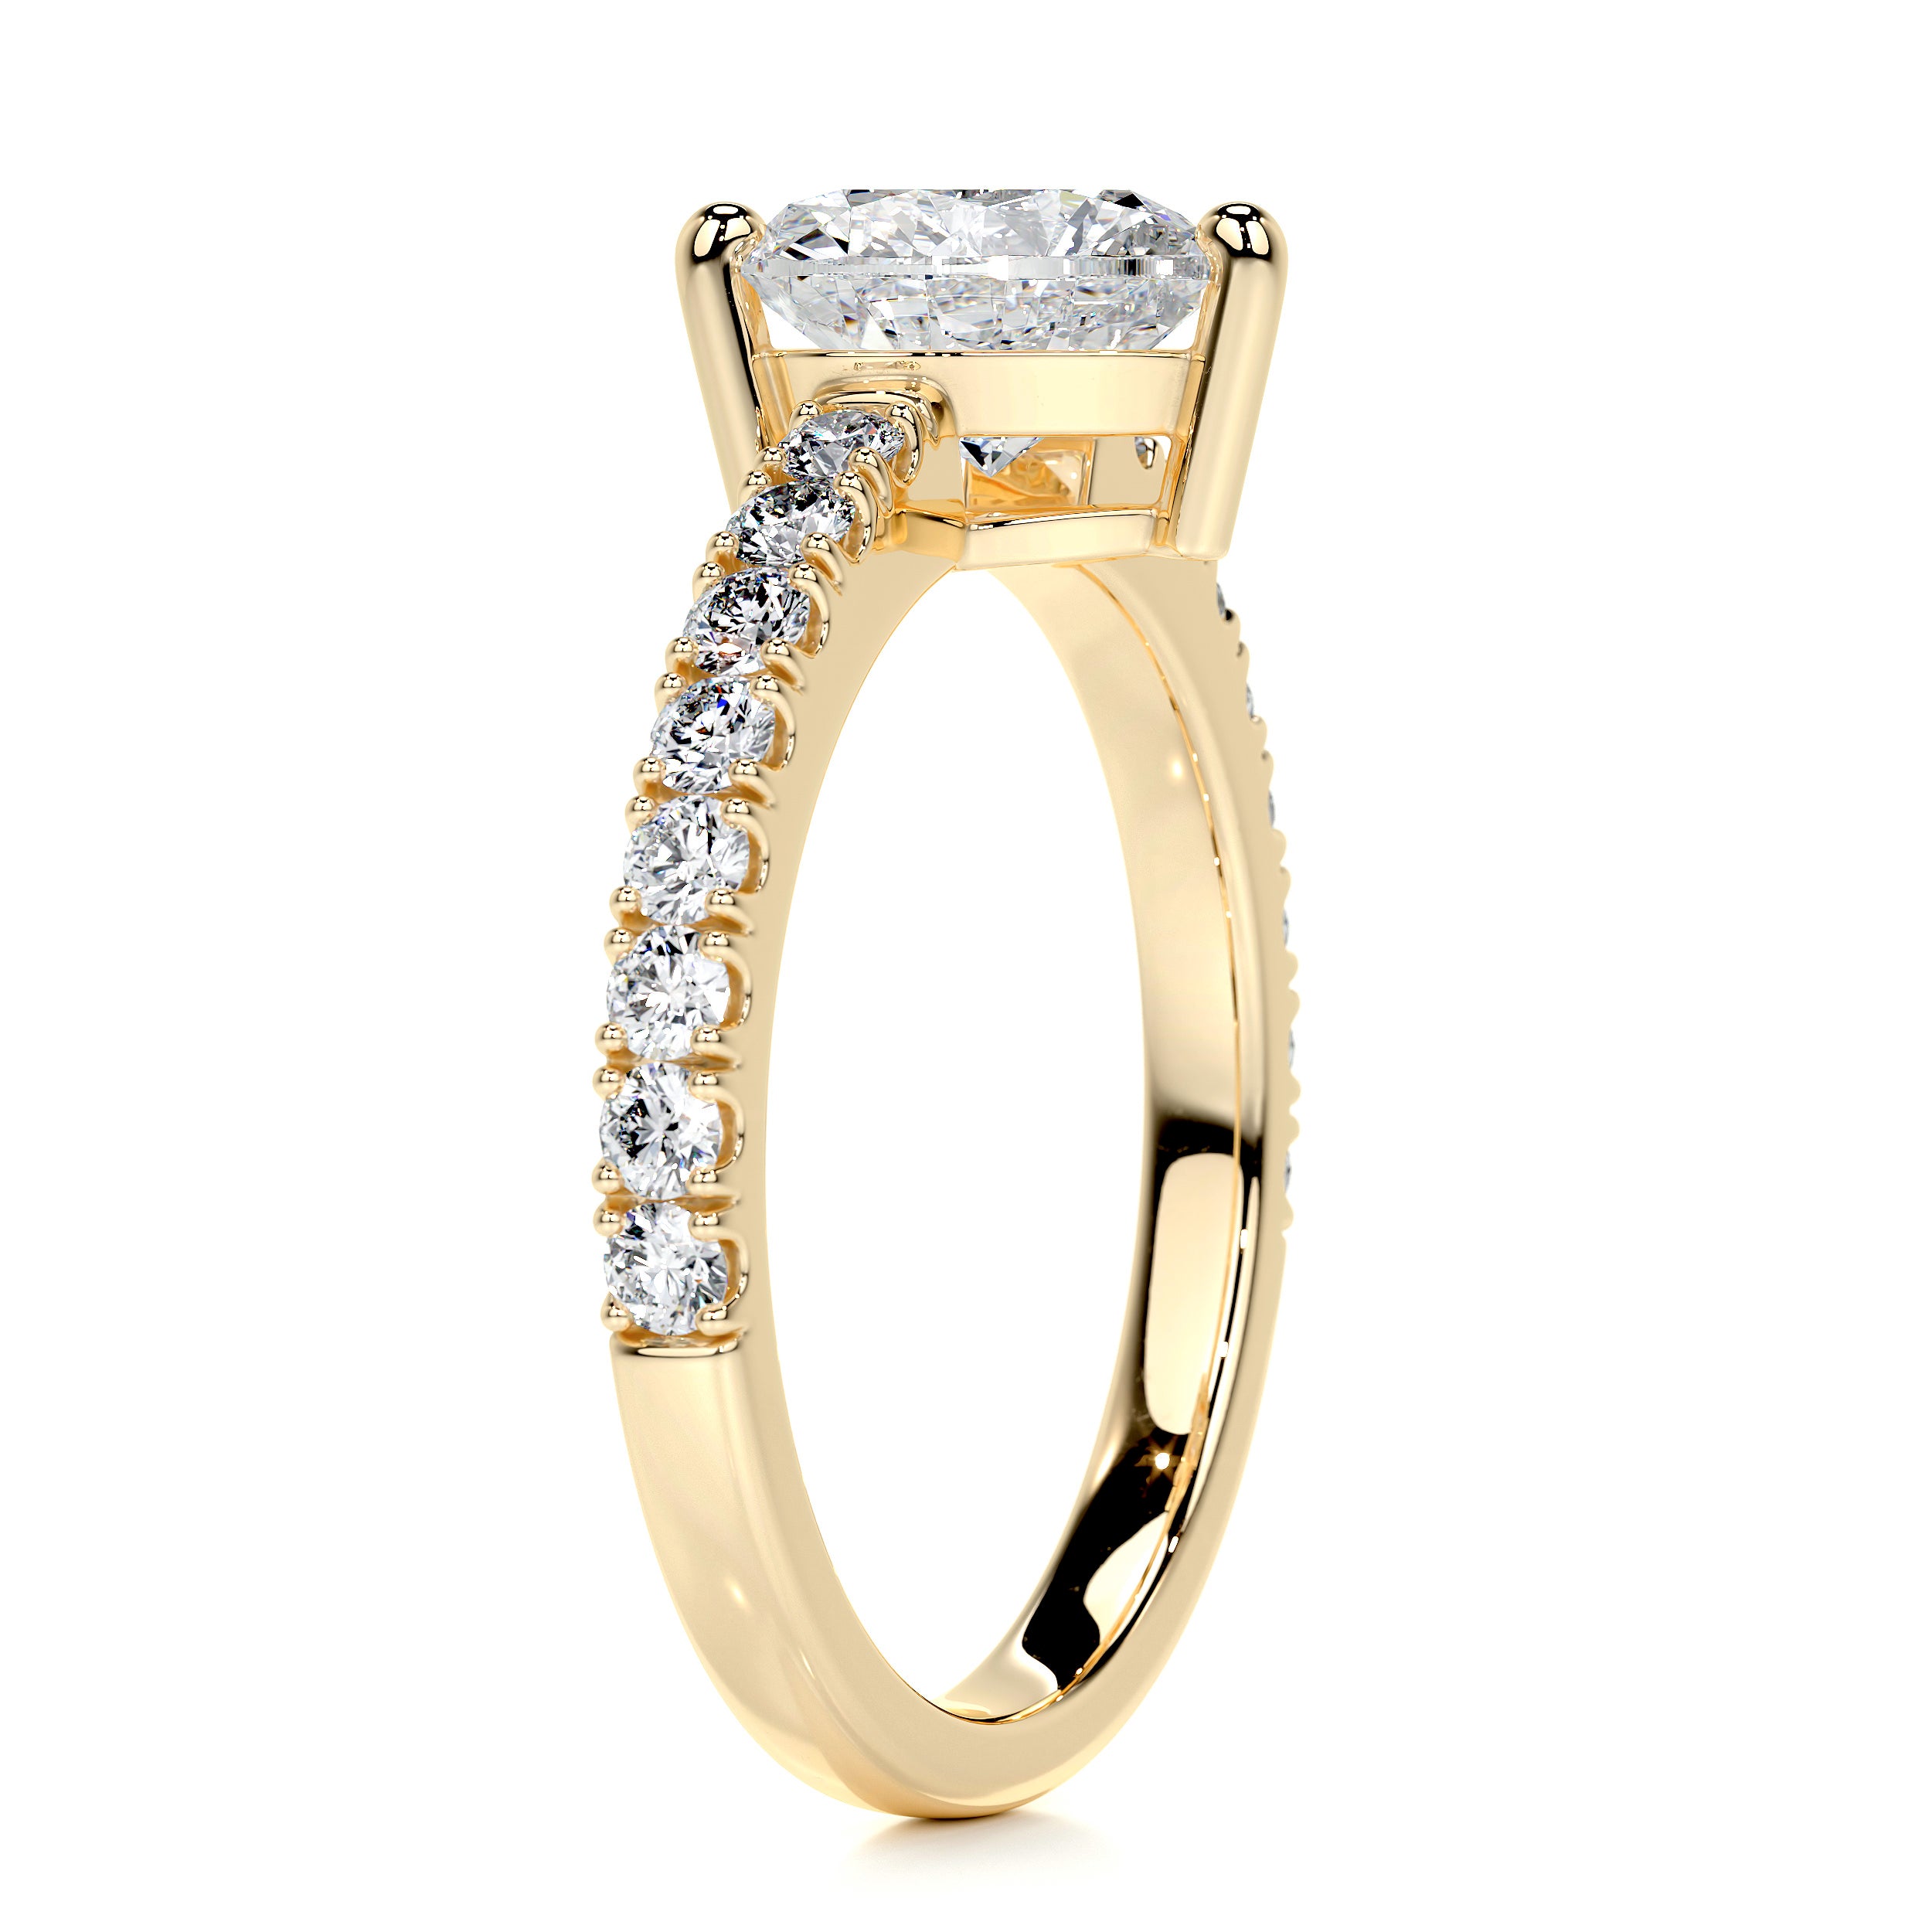 Audrey Diamond Engagement Ring   (1.3 Carat) -18K Yellow Gold